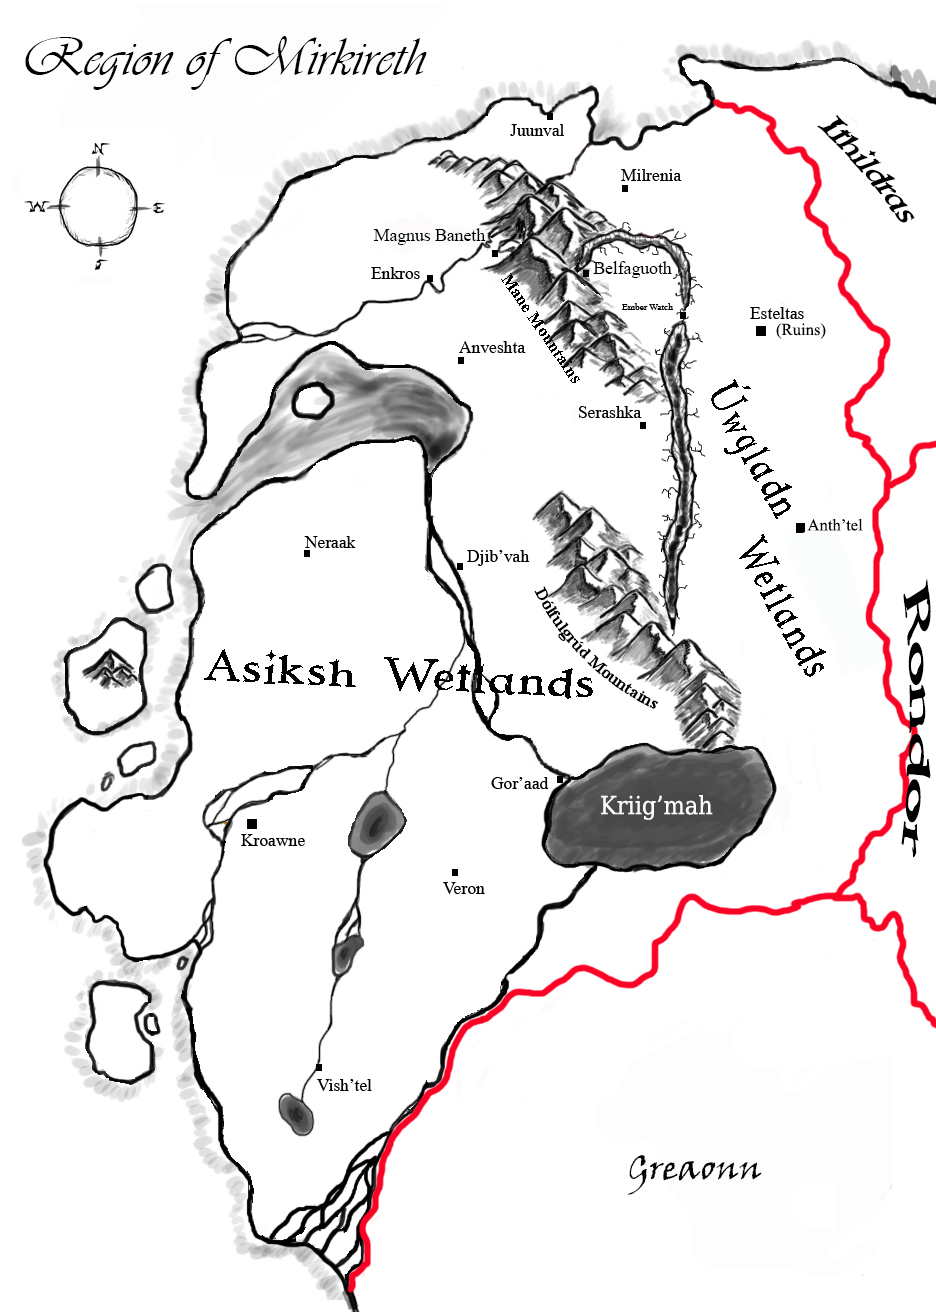 Map of Mirkireth